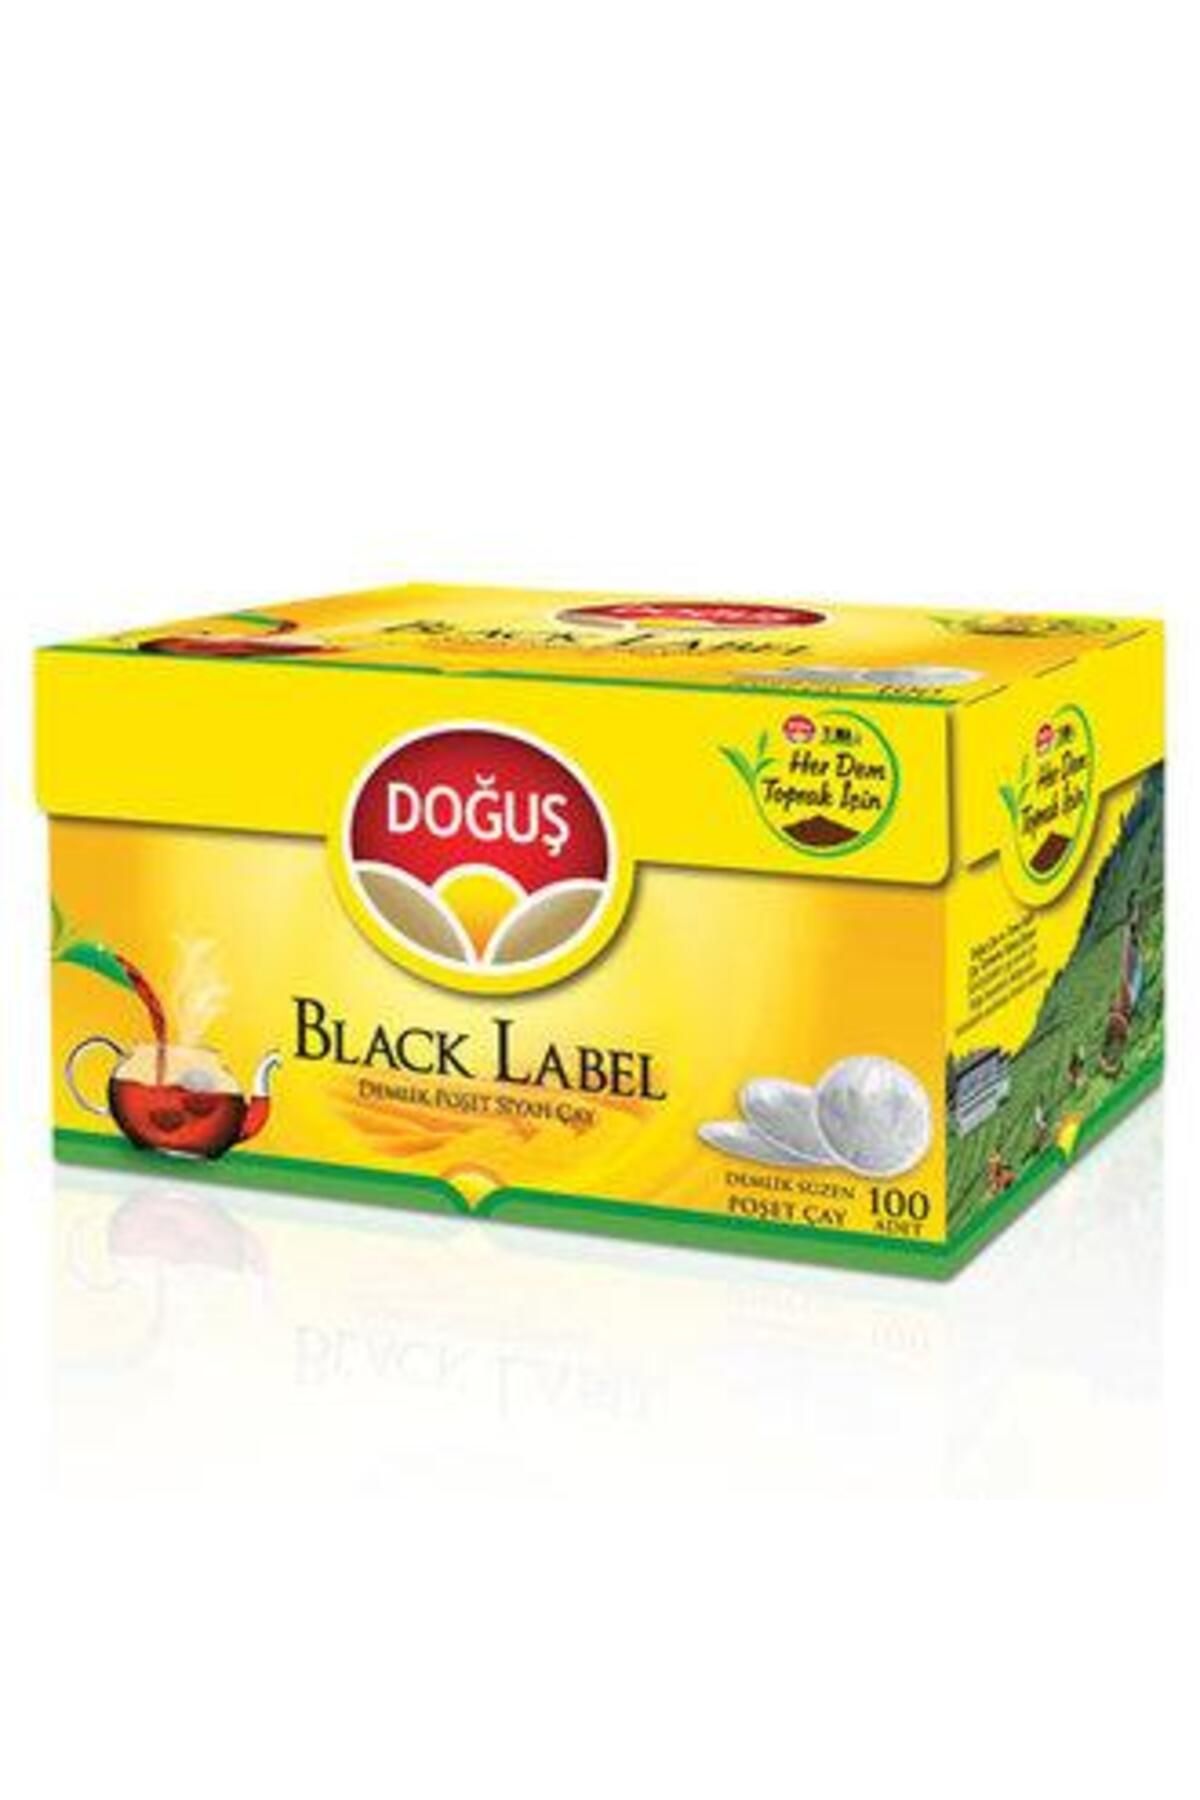 Doğuş Çay Doğuş Black Label Demlik 100'lü 320 Gr. (12'Lİ)